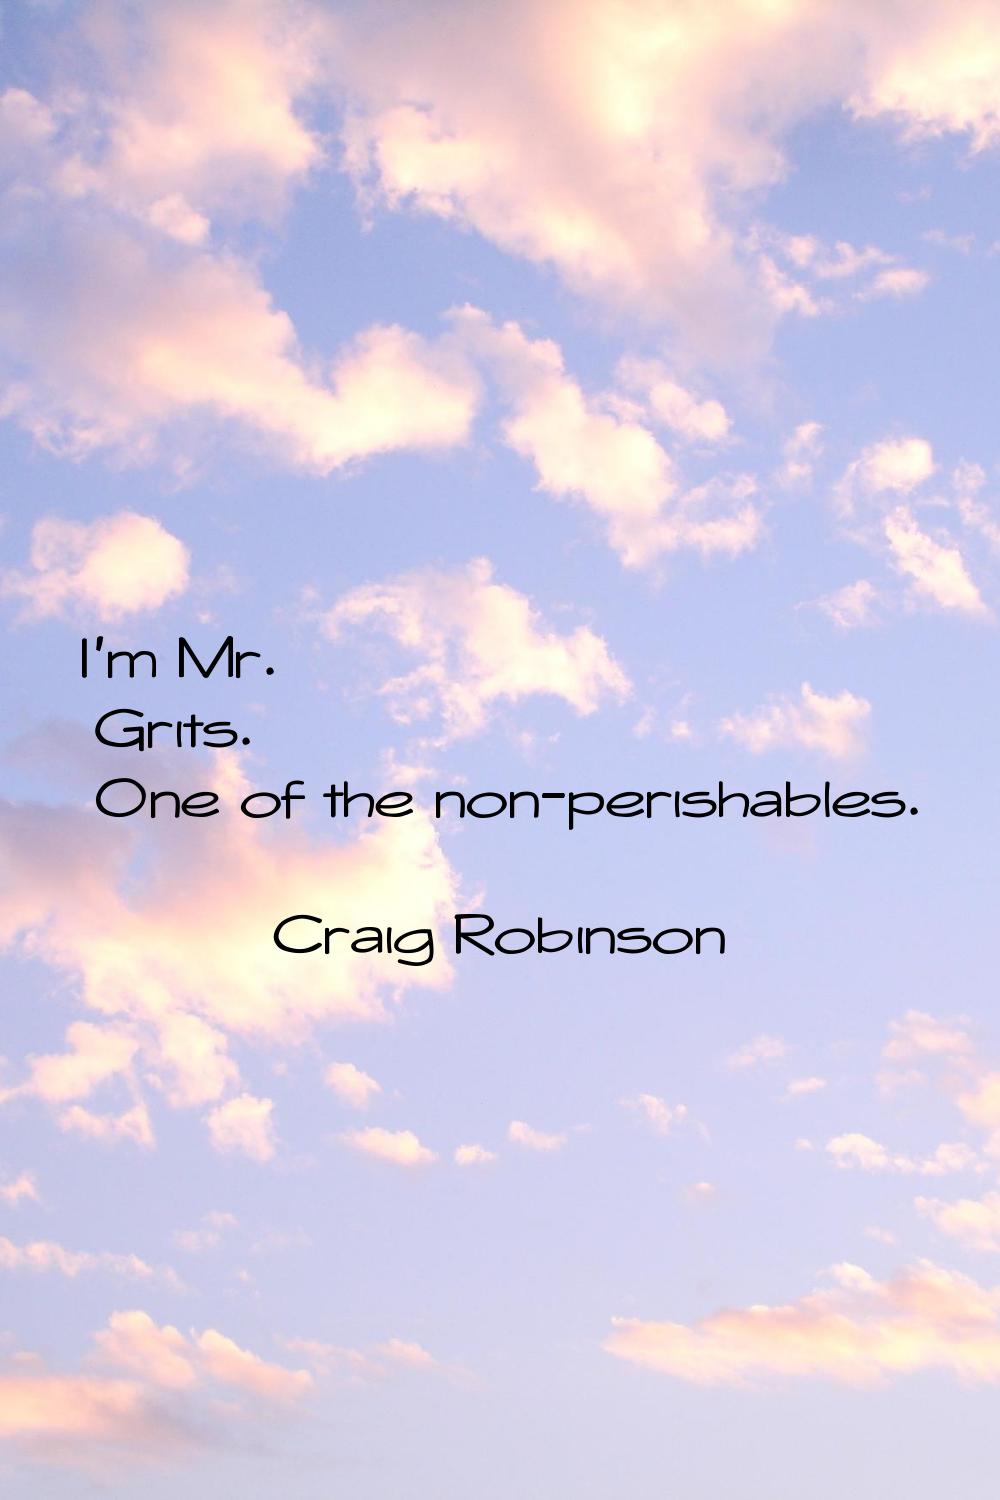 I'm Mr. Grits. One of the non-perishables.